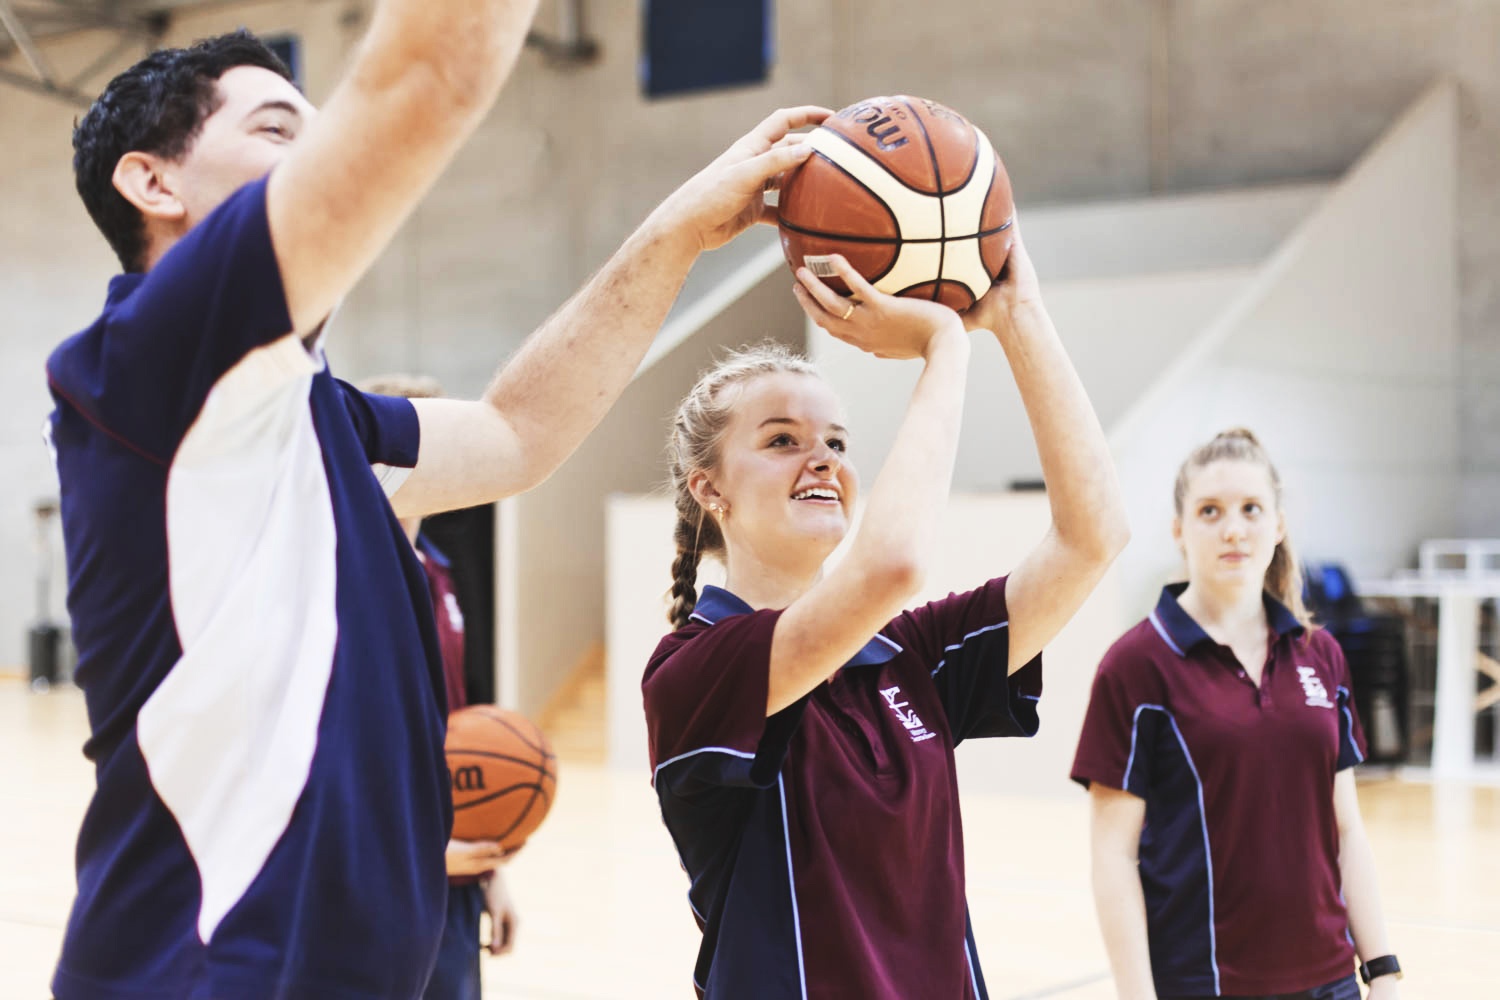 Teacher teaching female student in Medowie sports uniform how to shoot basketball